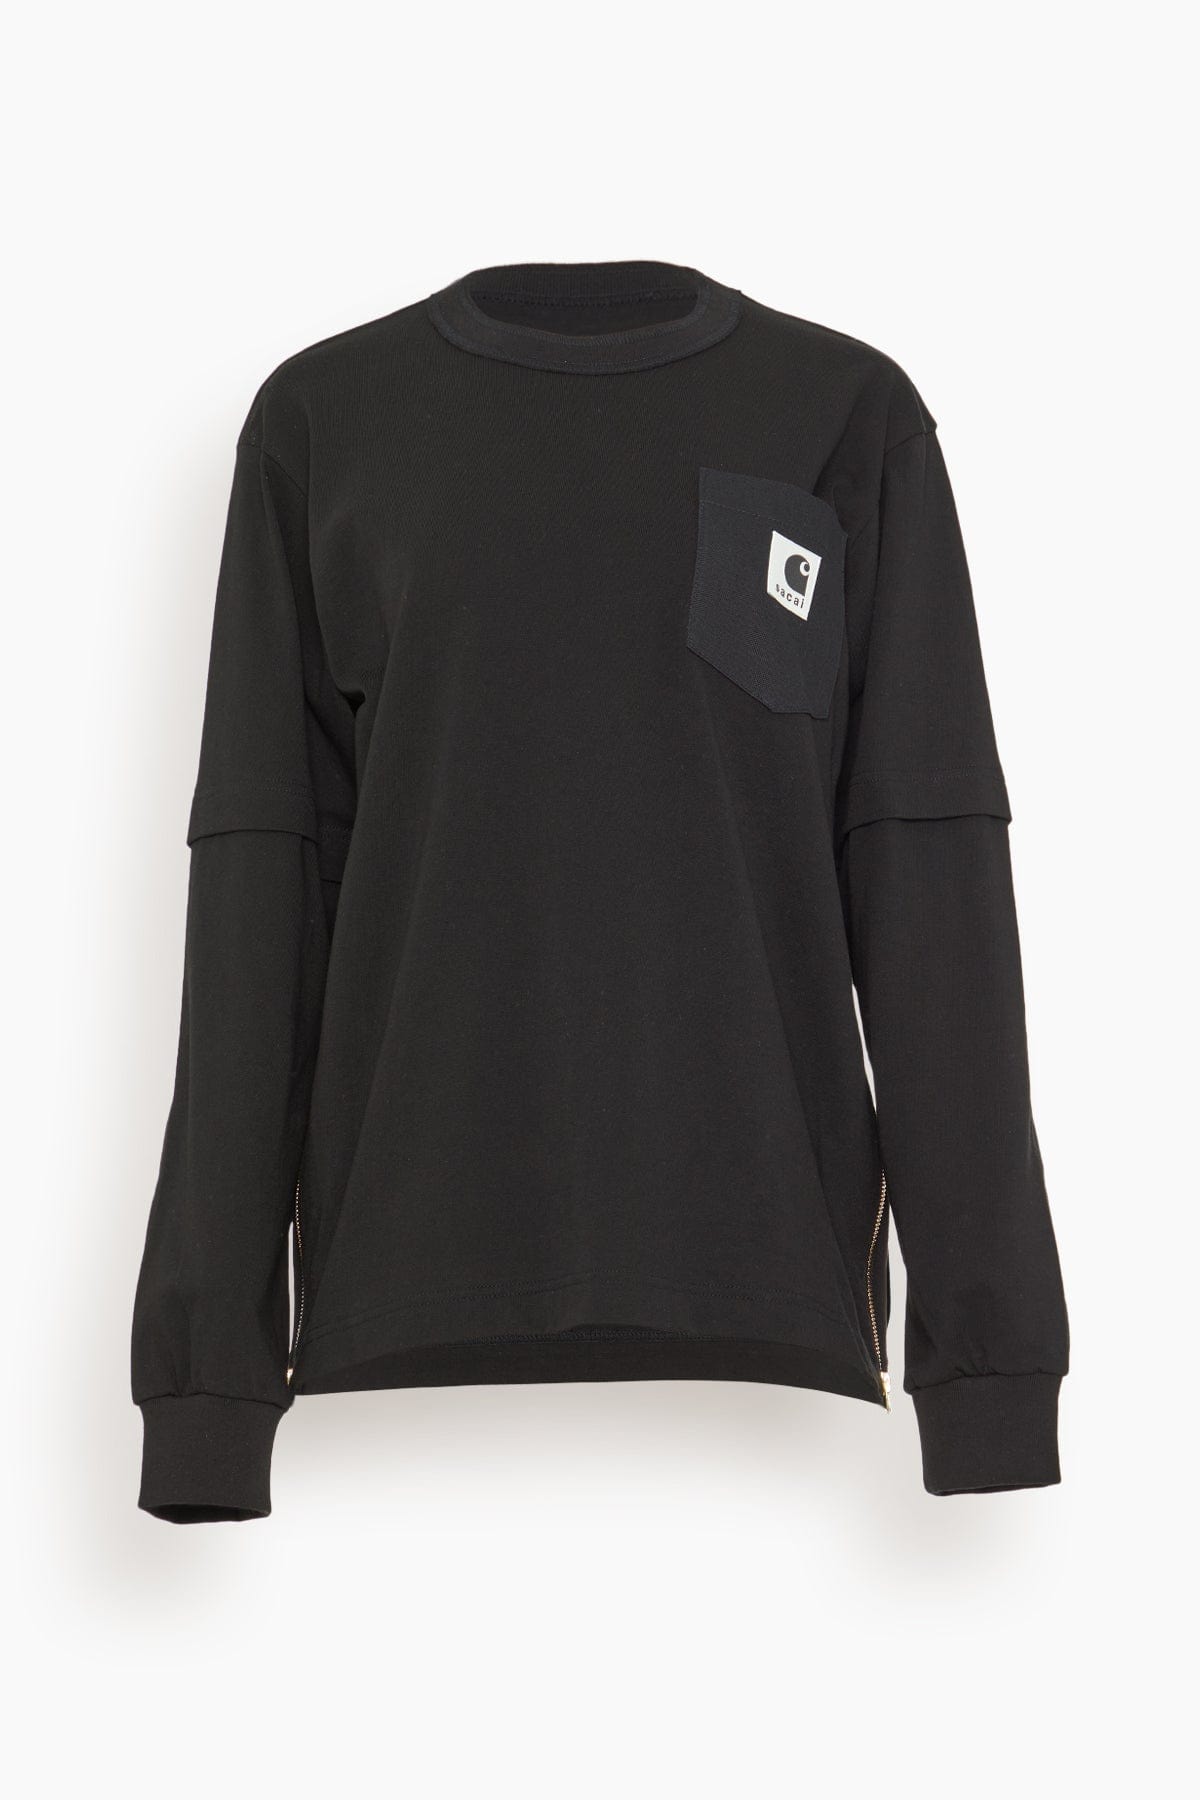 Sacai x Carhartt WIP Long Sleeve T-Shirt in Black - Black - Size: 4 / L